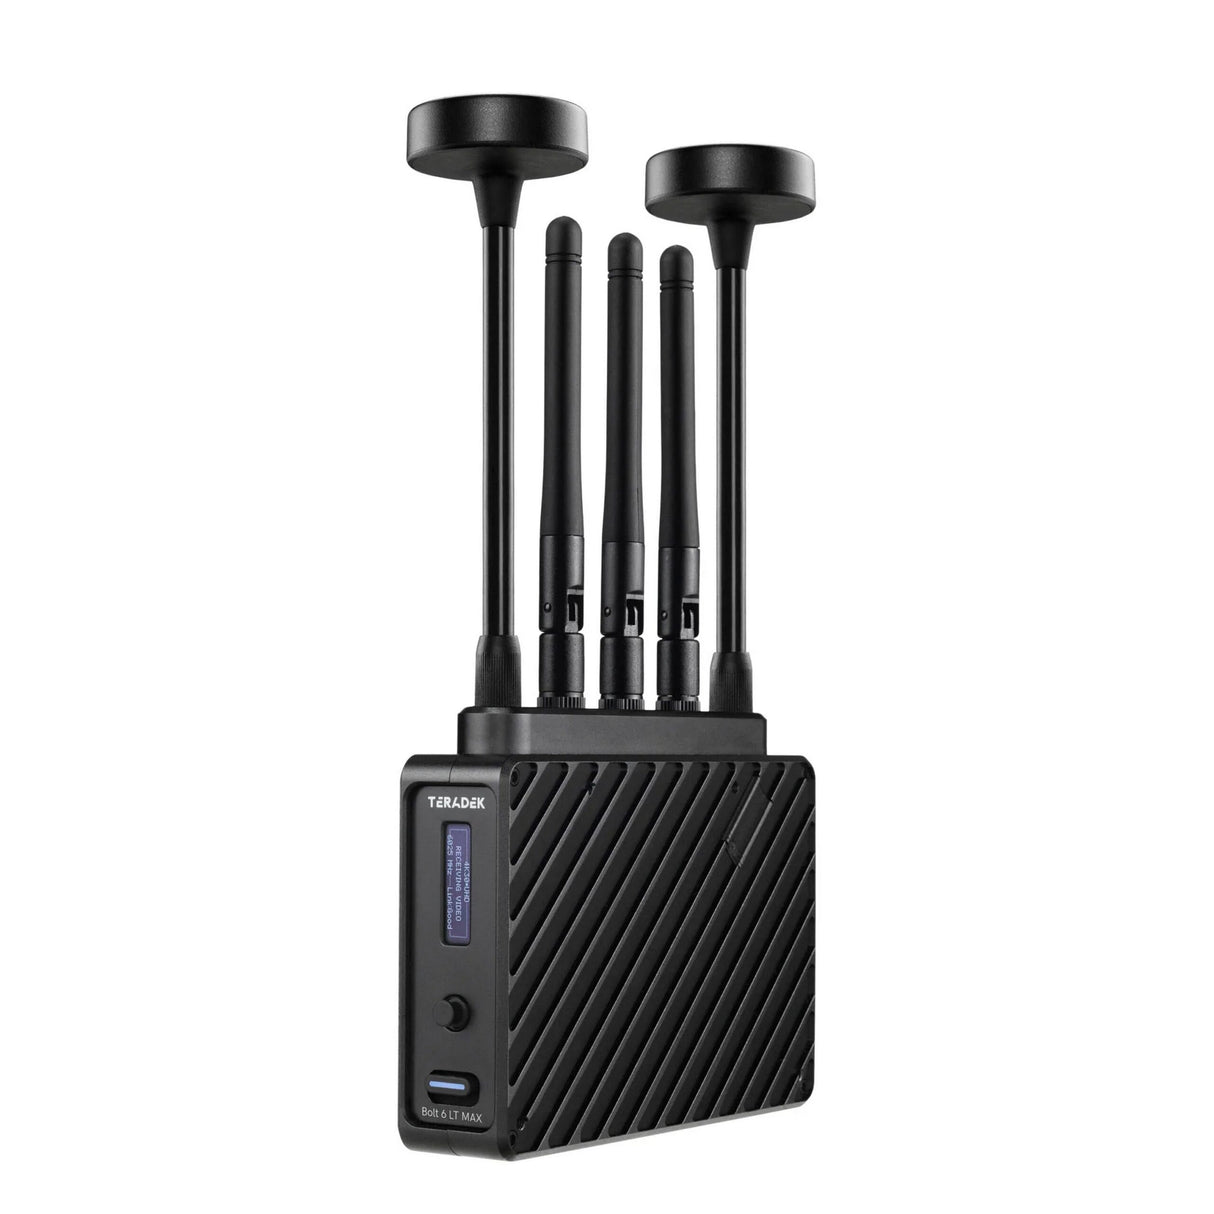 Teradek 10-2282 Bolt 6 LT Max Wireless Video Receiver